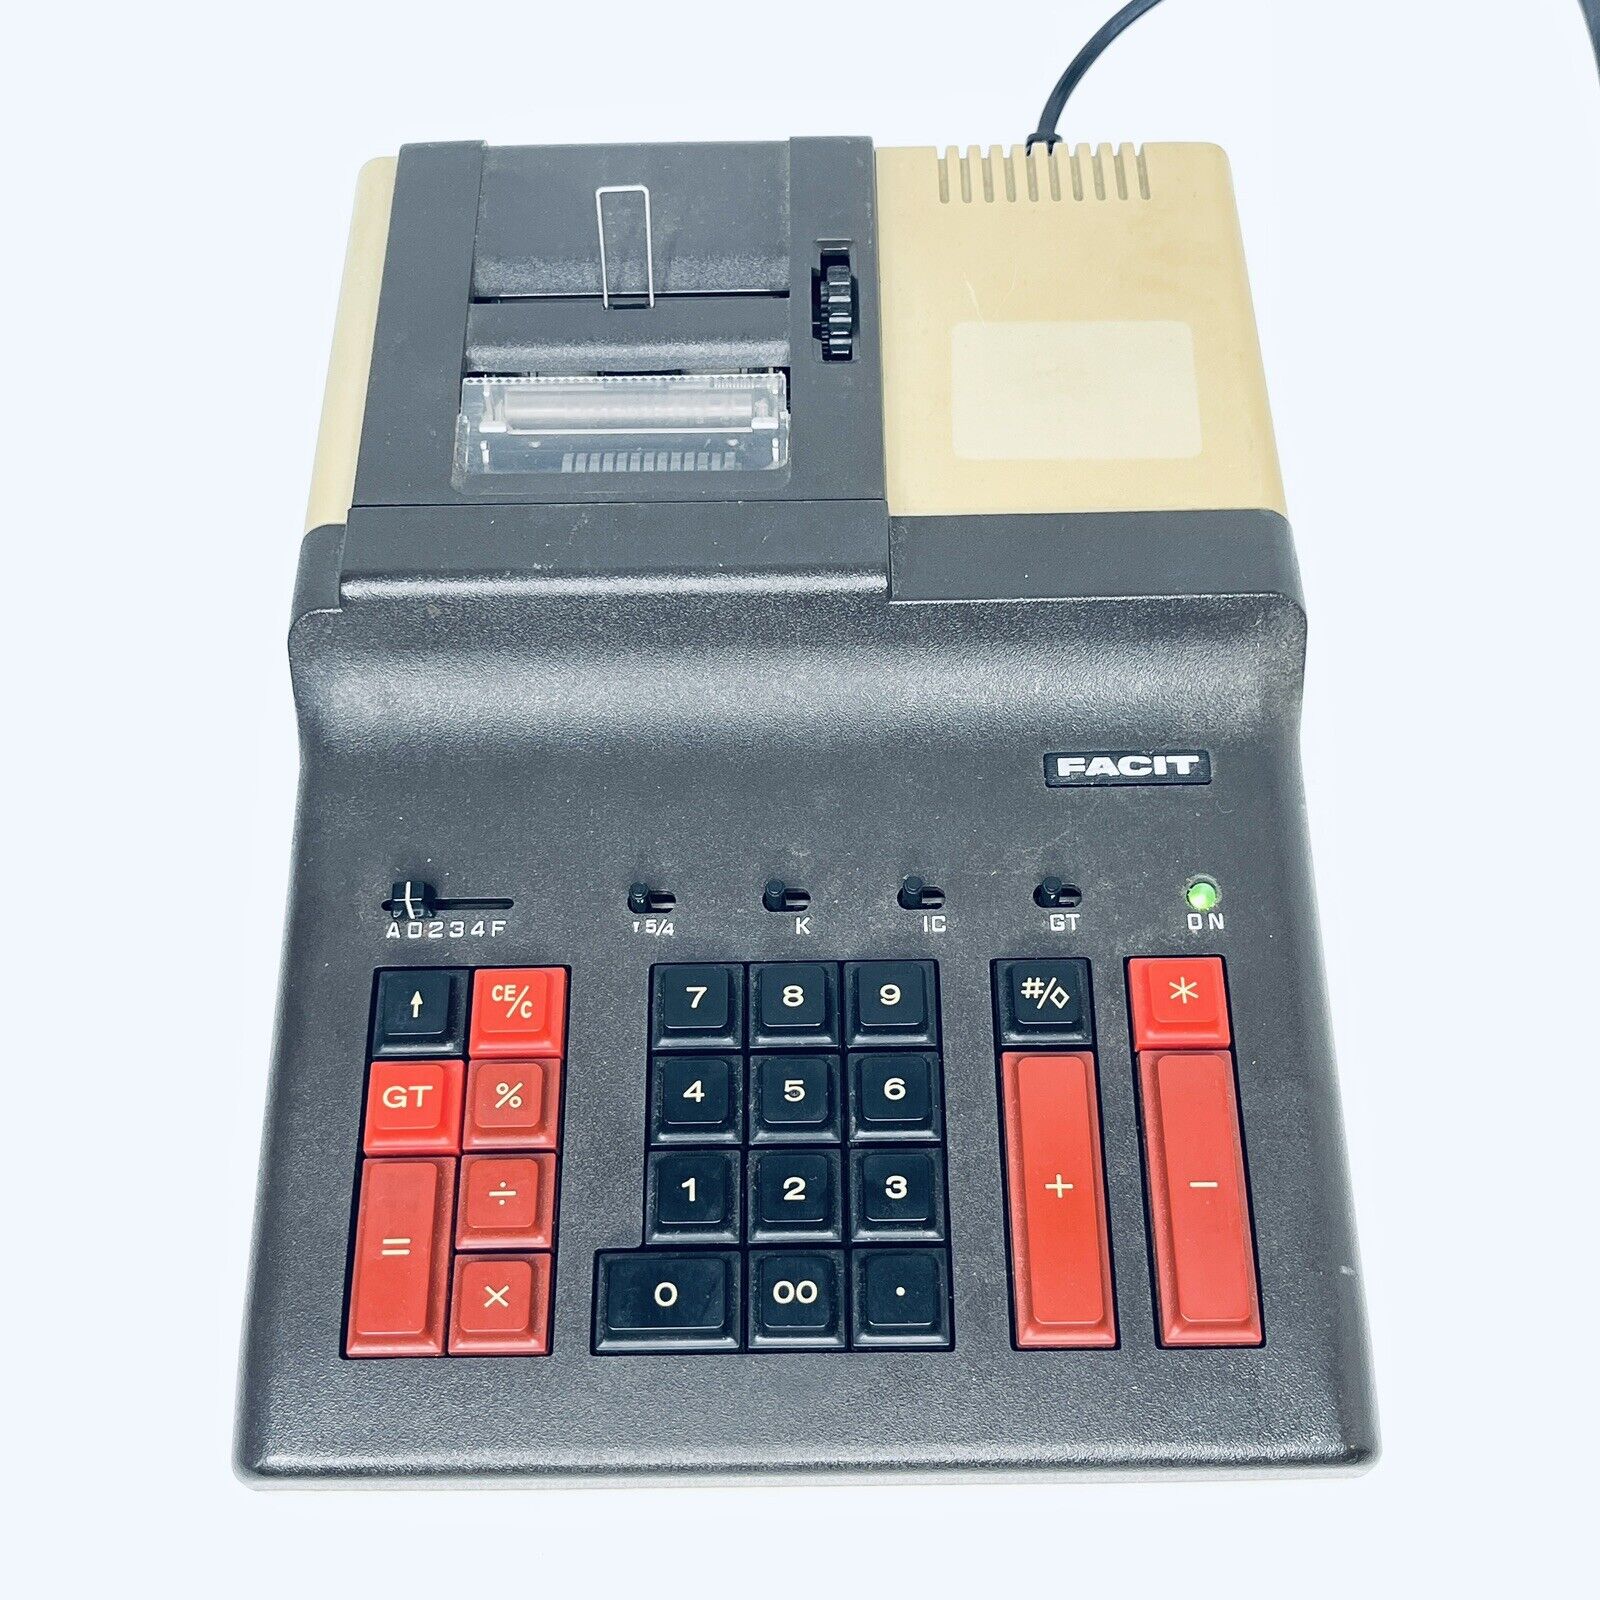 Facit 2202 calculator Vintage Retro 1980 Japan Desktop Printing  Adding Machine